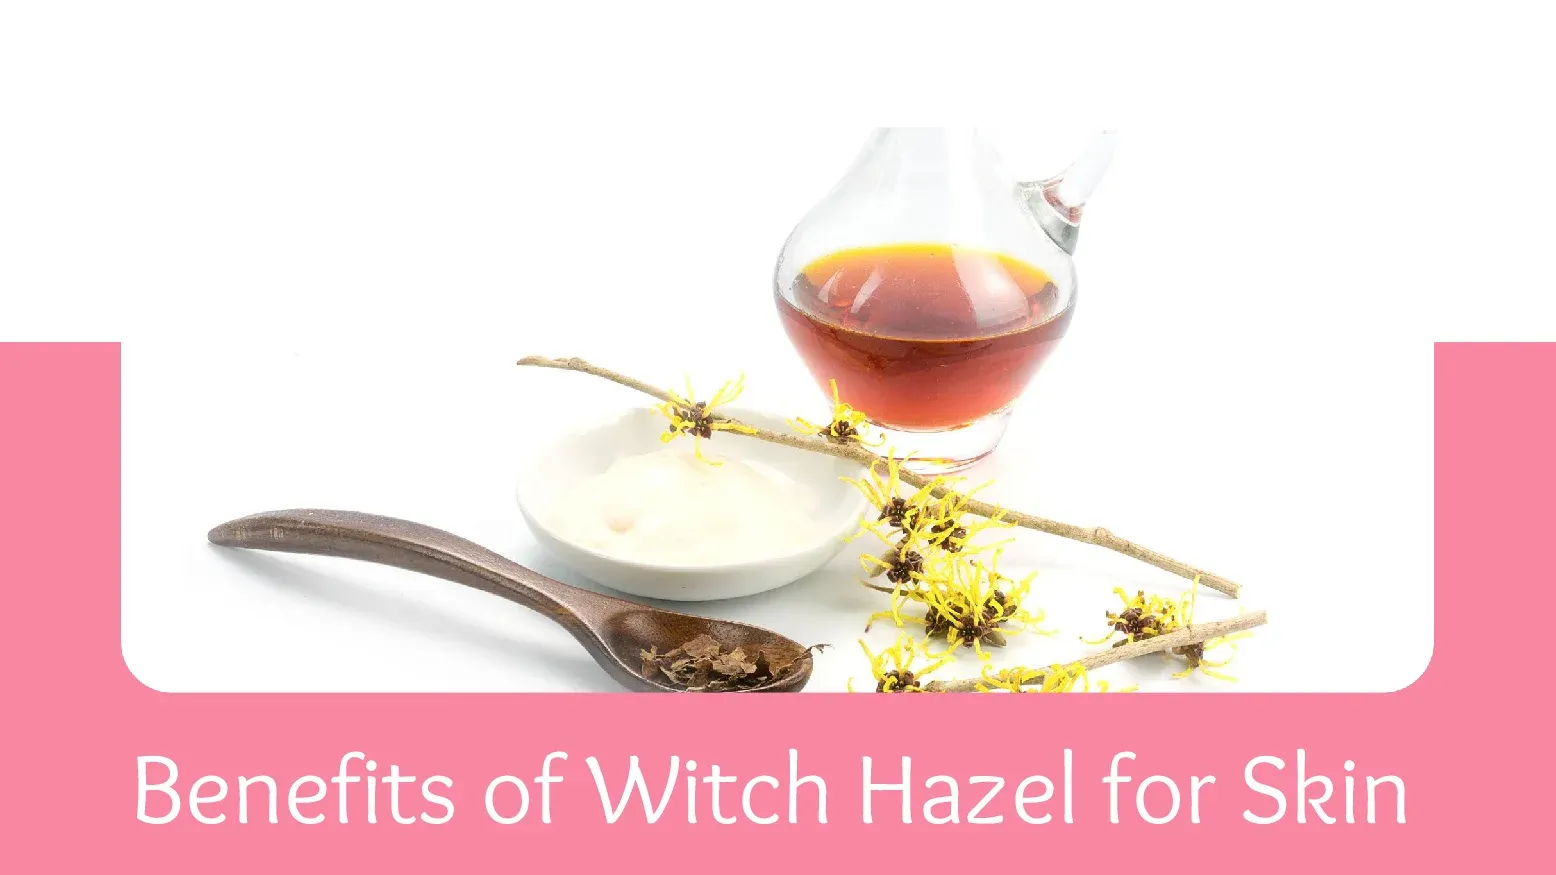 Witch Hazel For The Skin